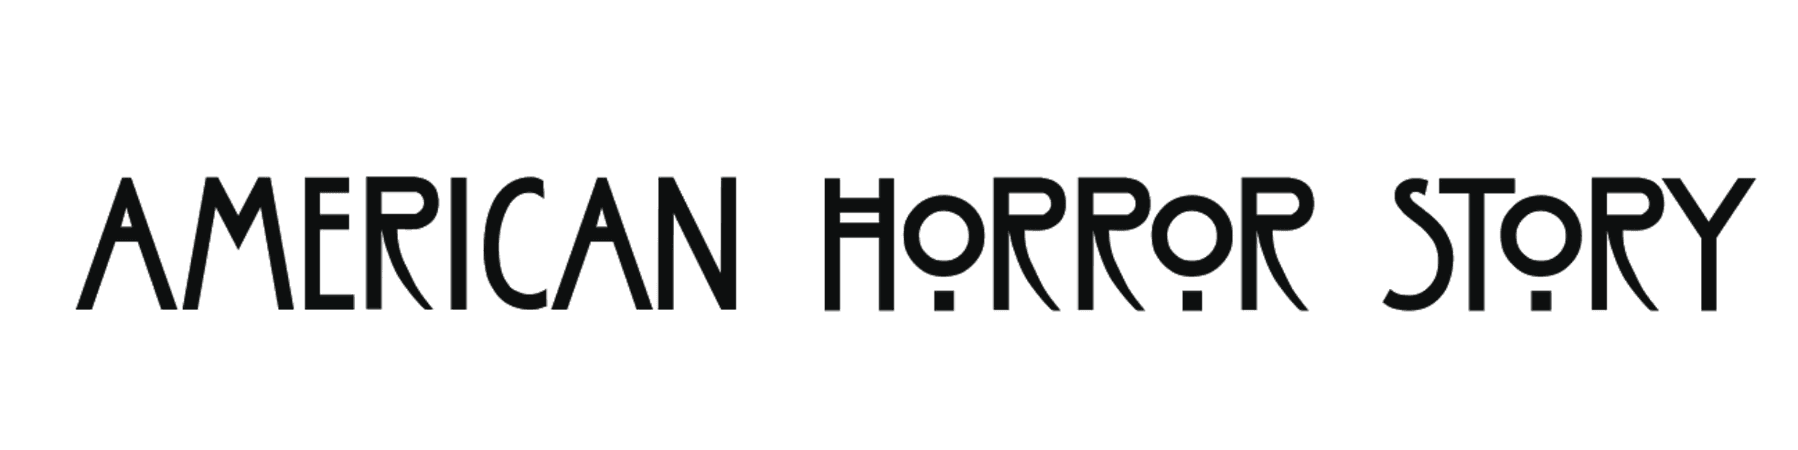 american horror story logo